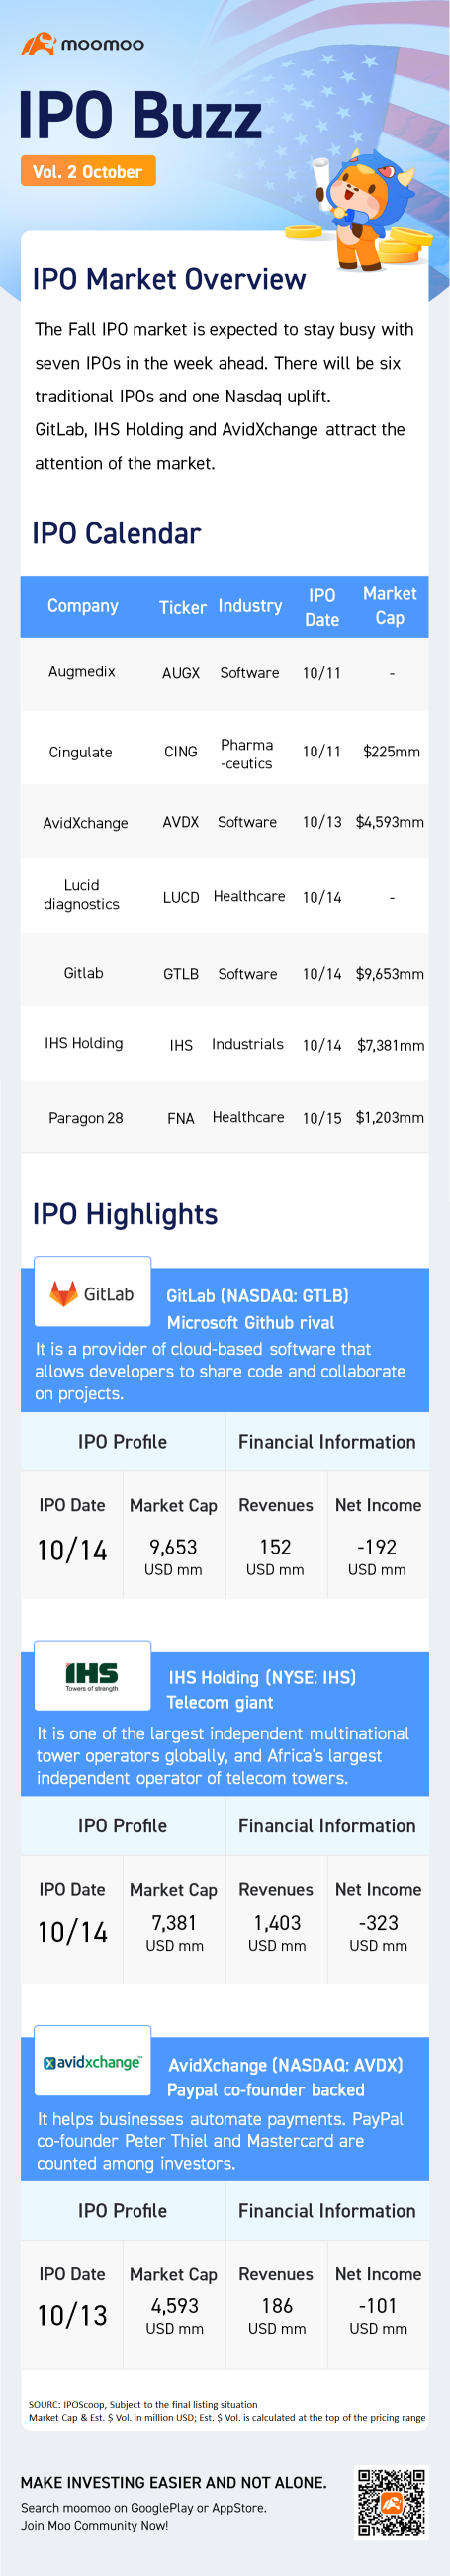 IPO Buzz | 微软 github 的竞争对手 gitlab 在 7 次首次公开募股周